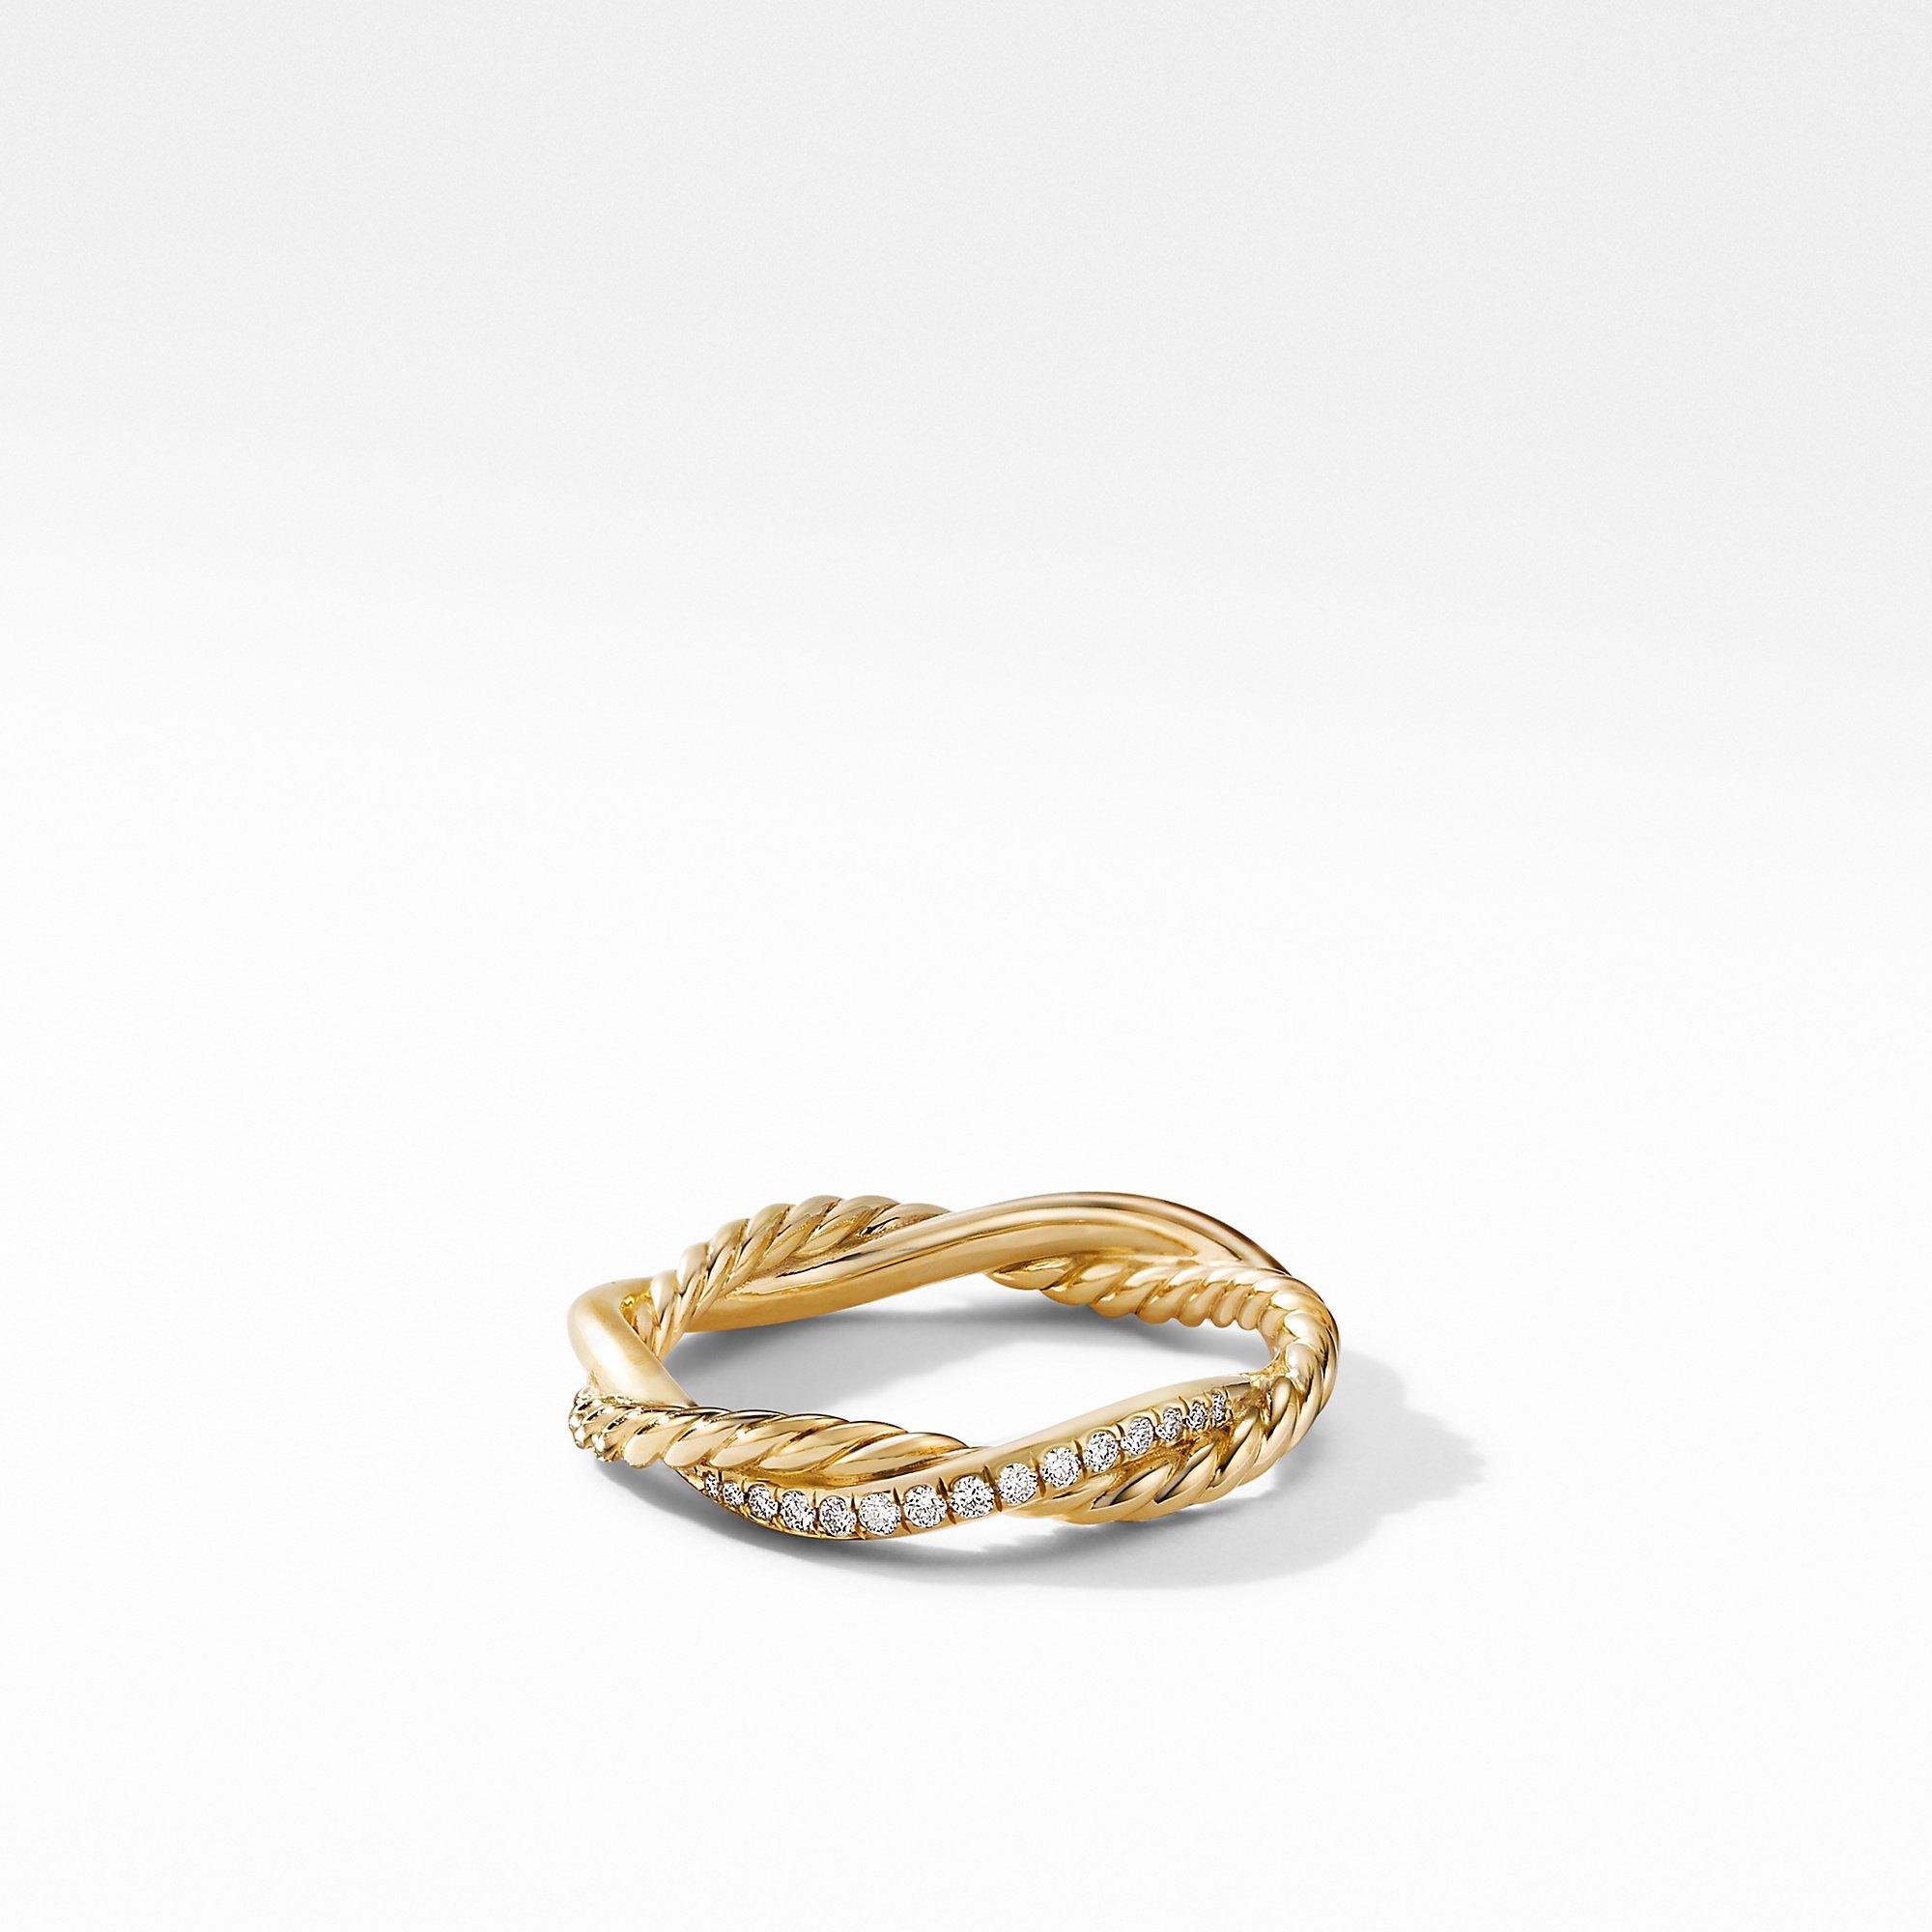 David Yurman Petite Infinity Twisted Ring in 18k Yellow Gold, size 8 0